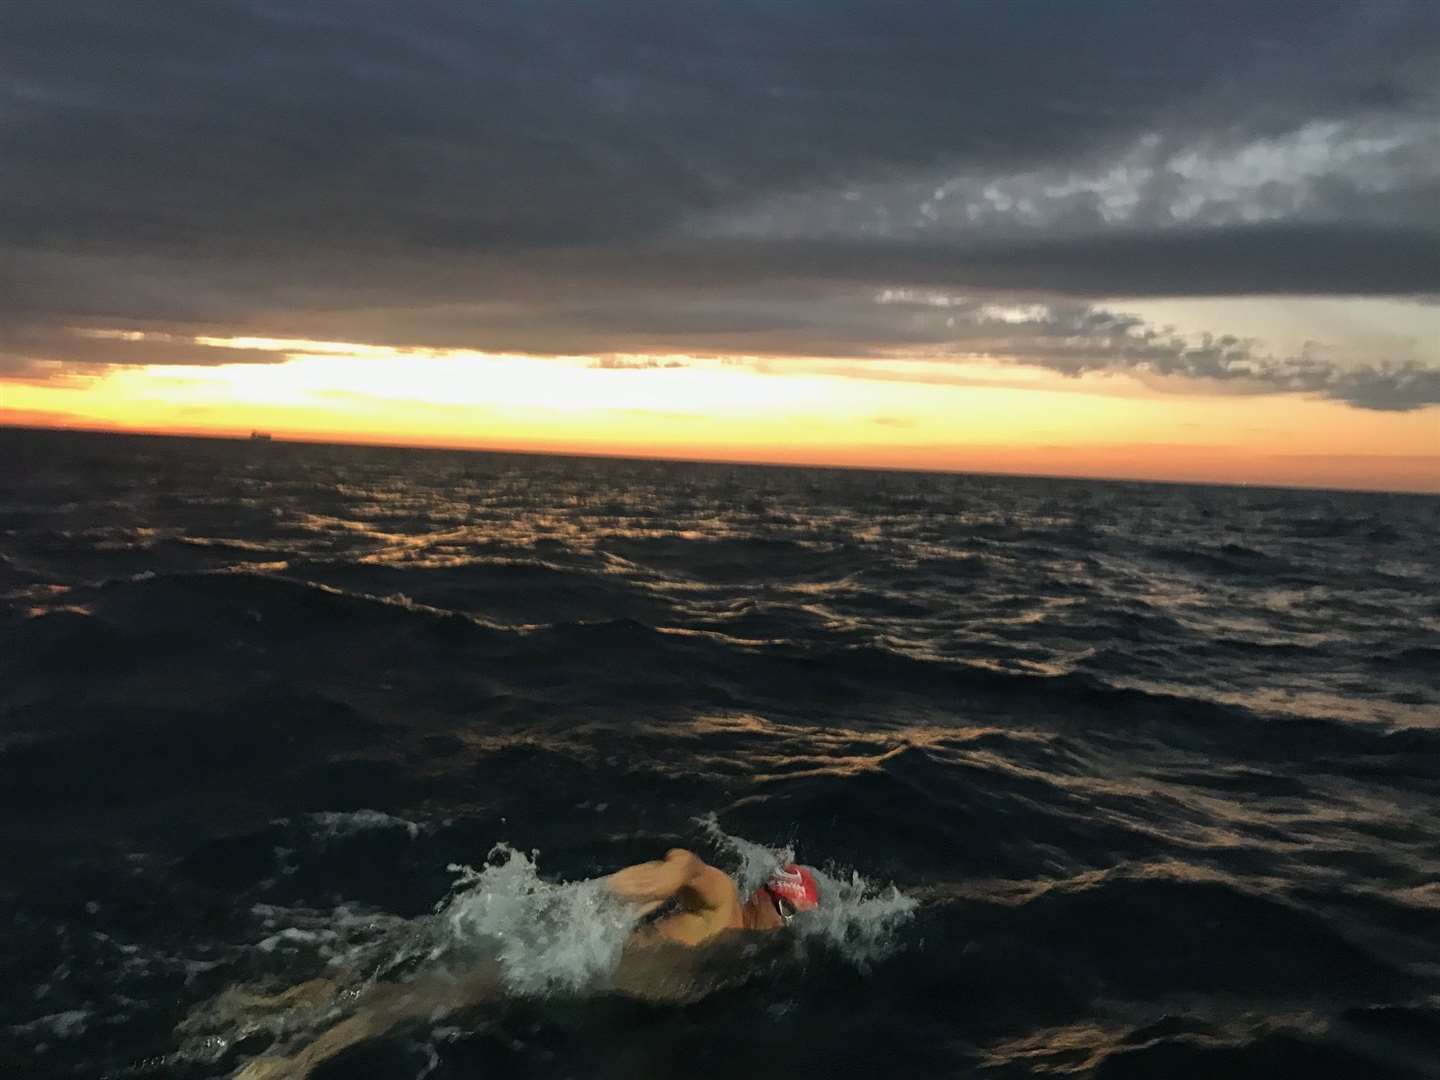 Justin Legge during his epic cross Channel swim